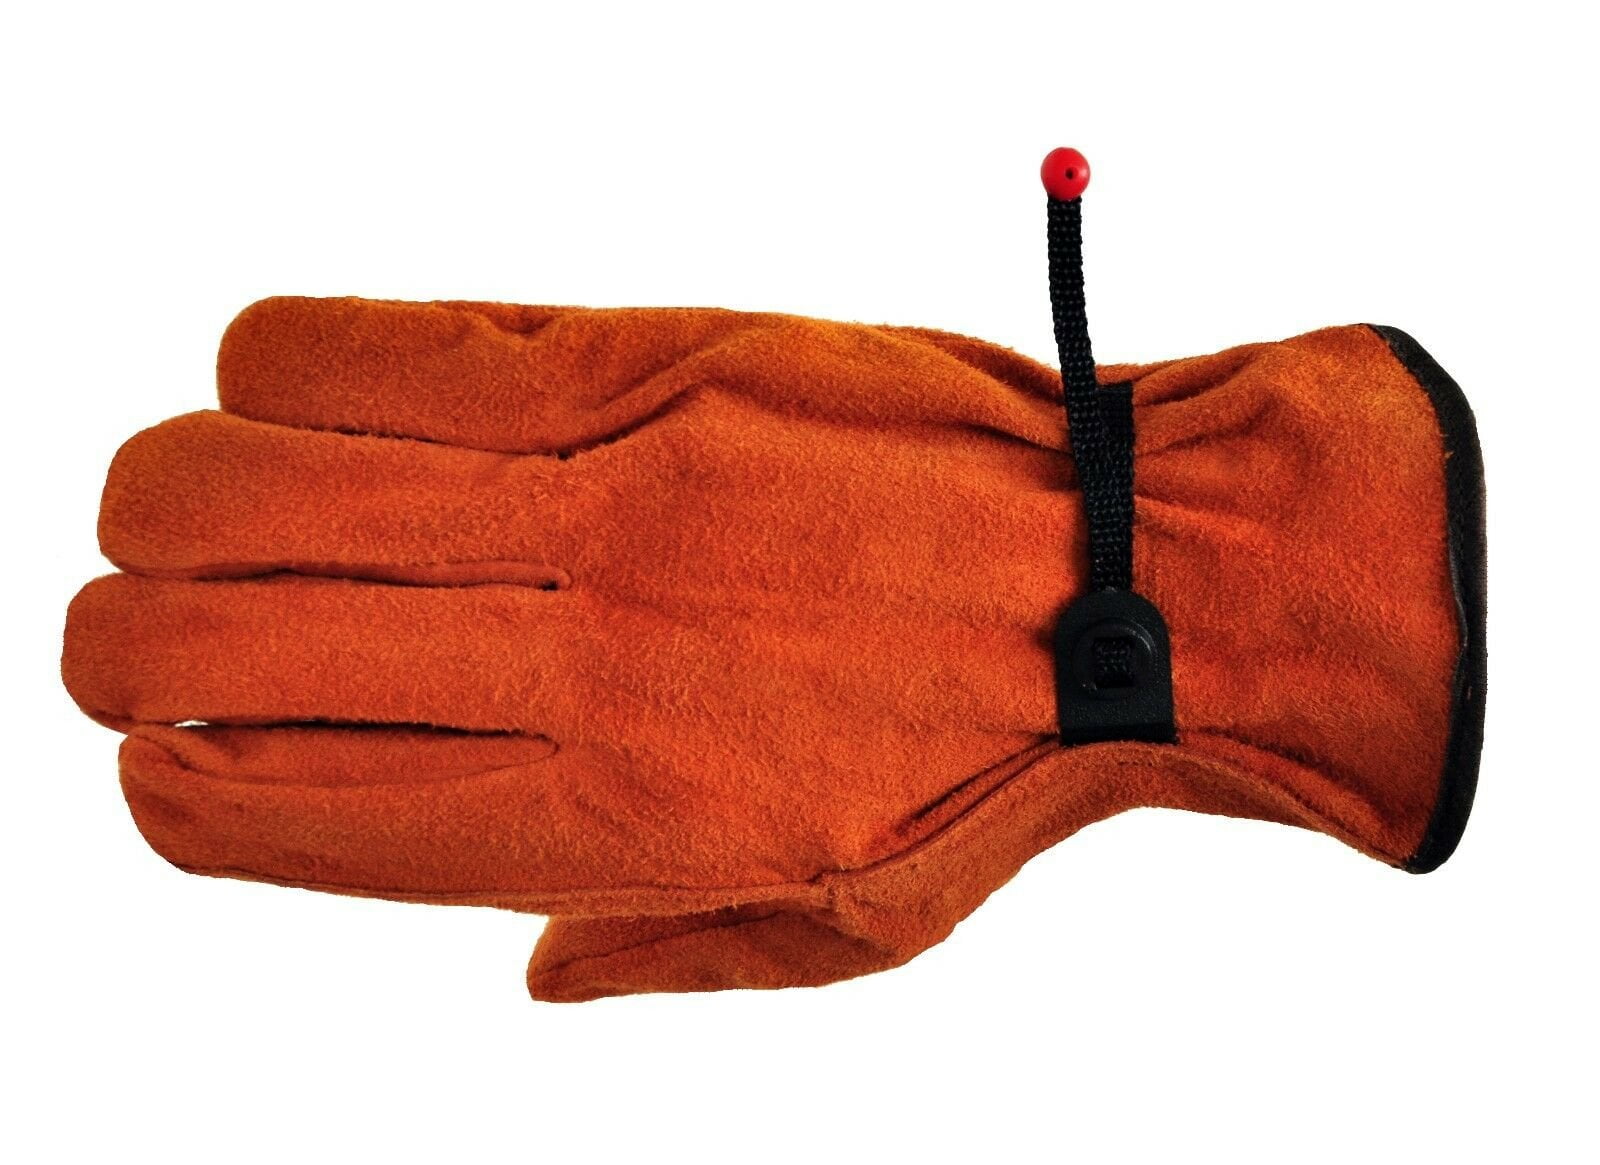 3-Pair Pack G & F 2002 Grain Pigskin Leather Work Gloves 